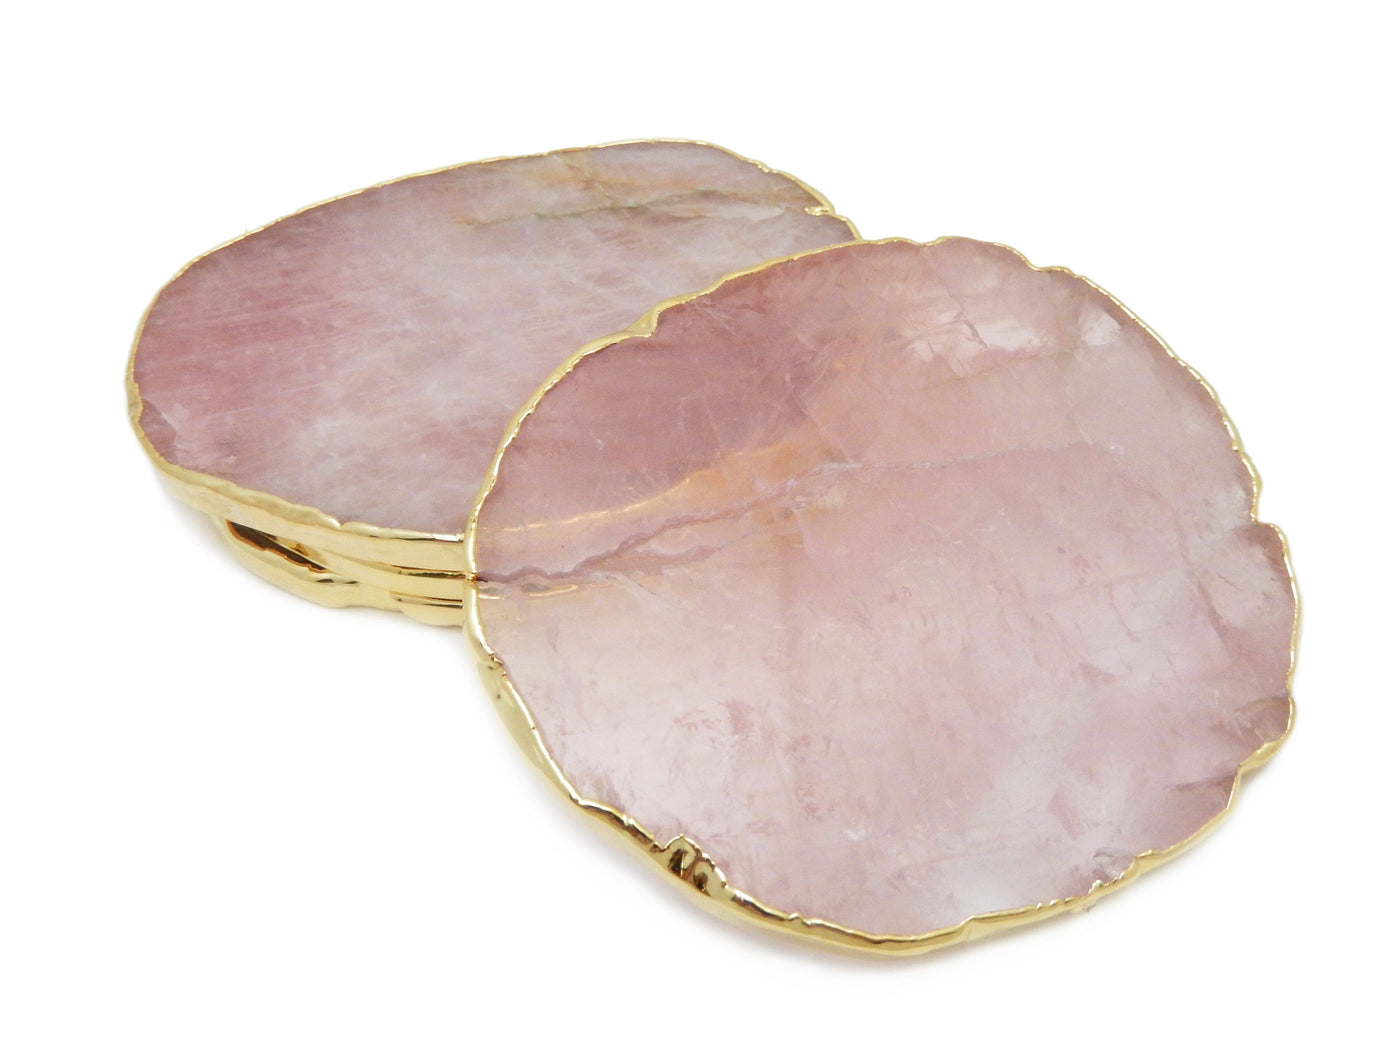 Stone Slices - Coaster Size rose quartz with gold edge